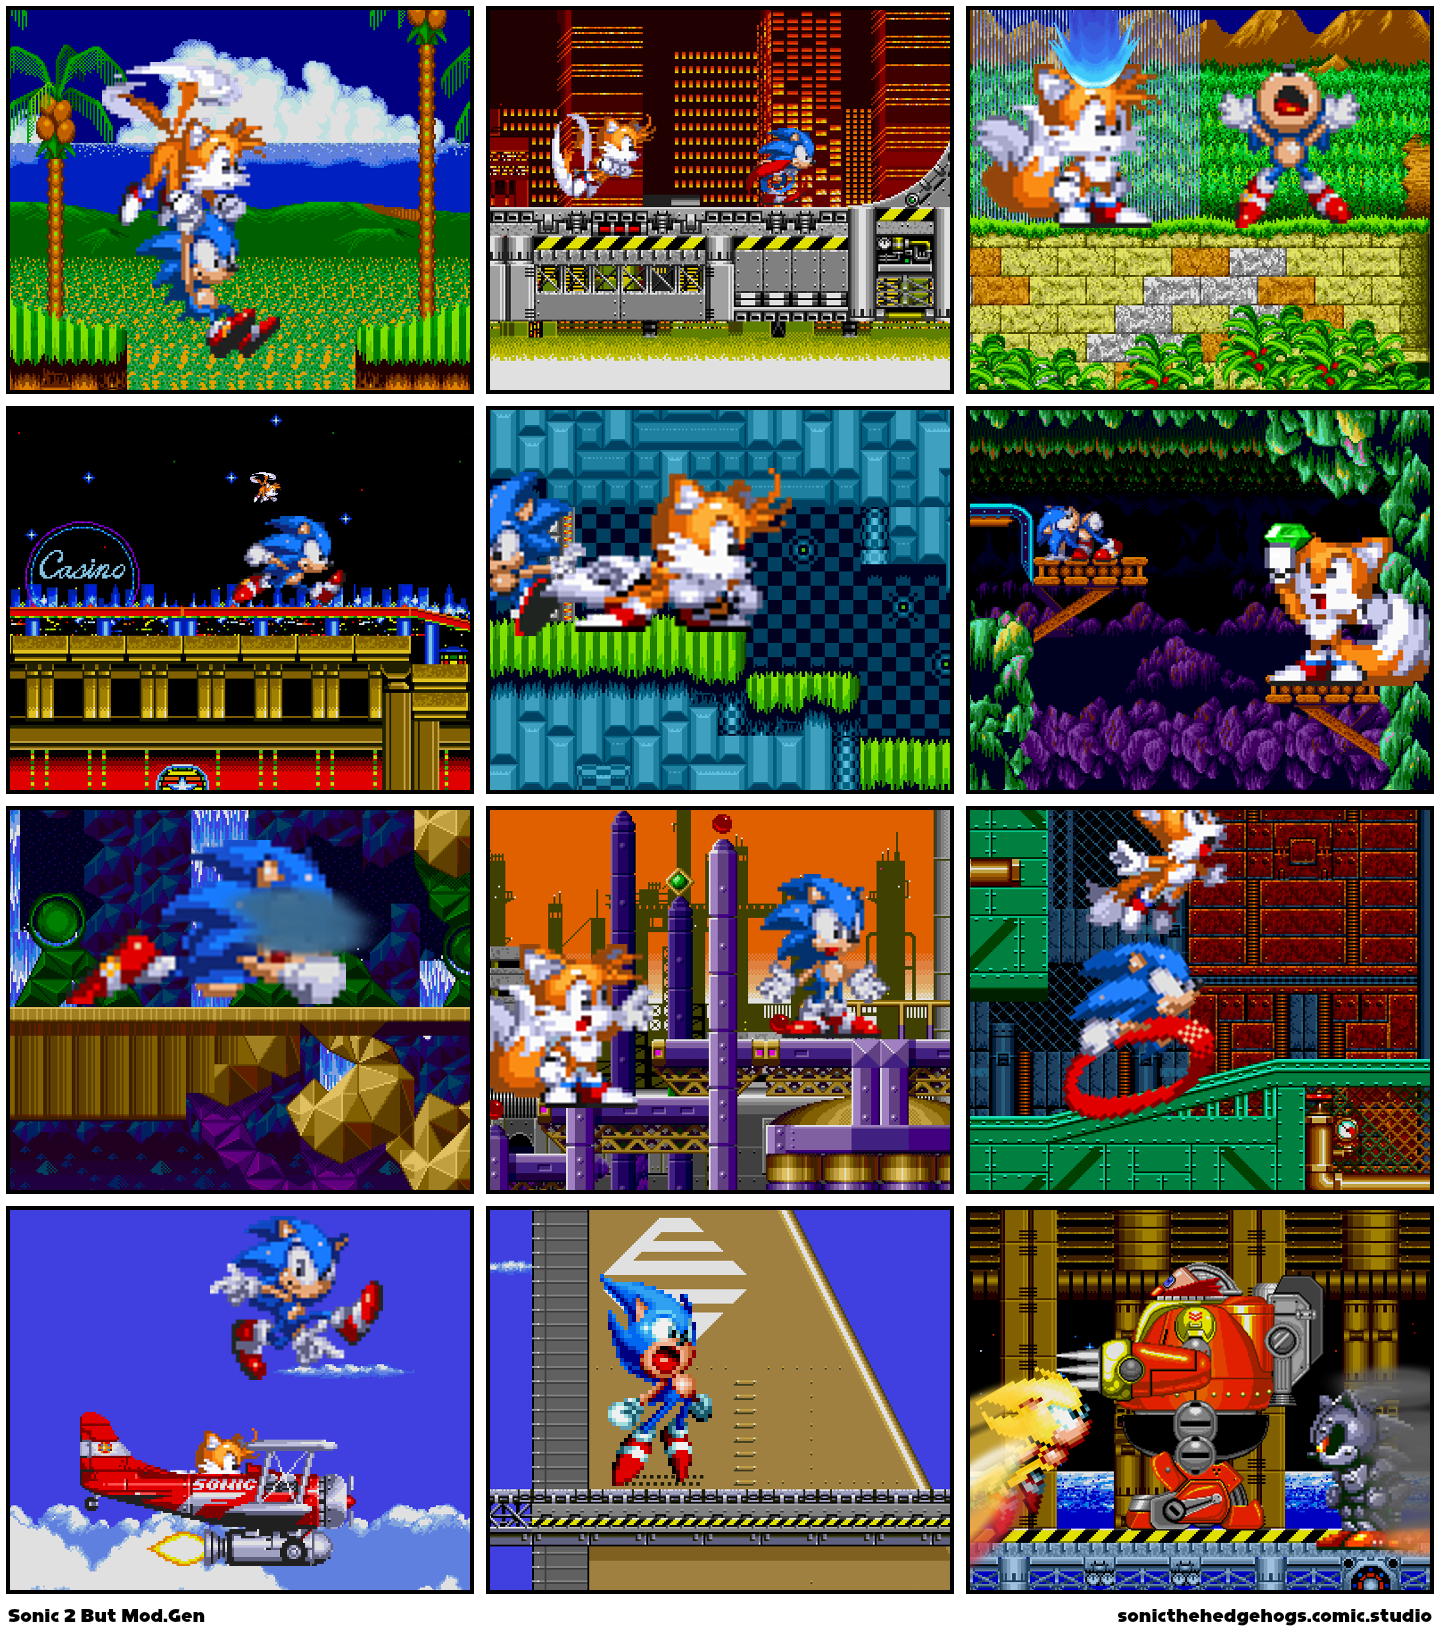 Sonic 2 But Mod.Gen - Comic Studio